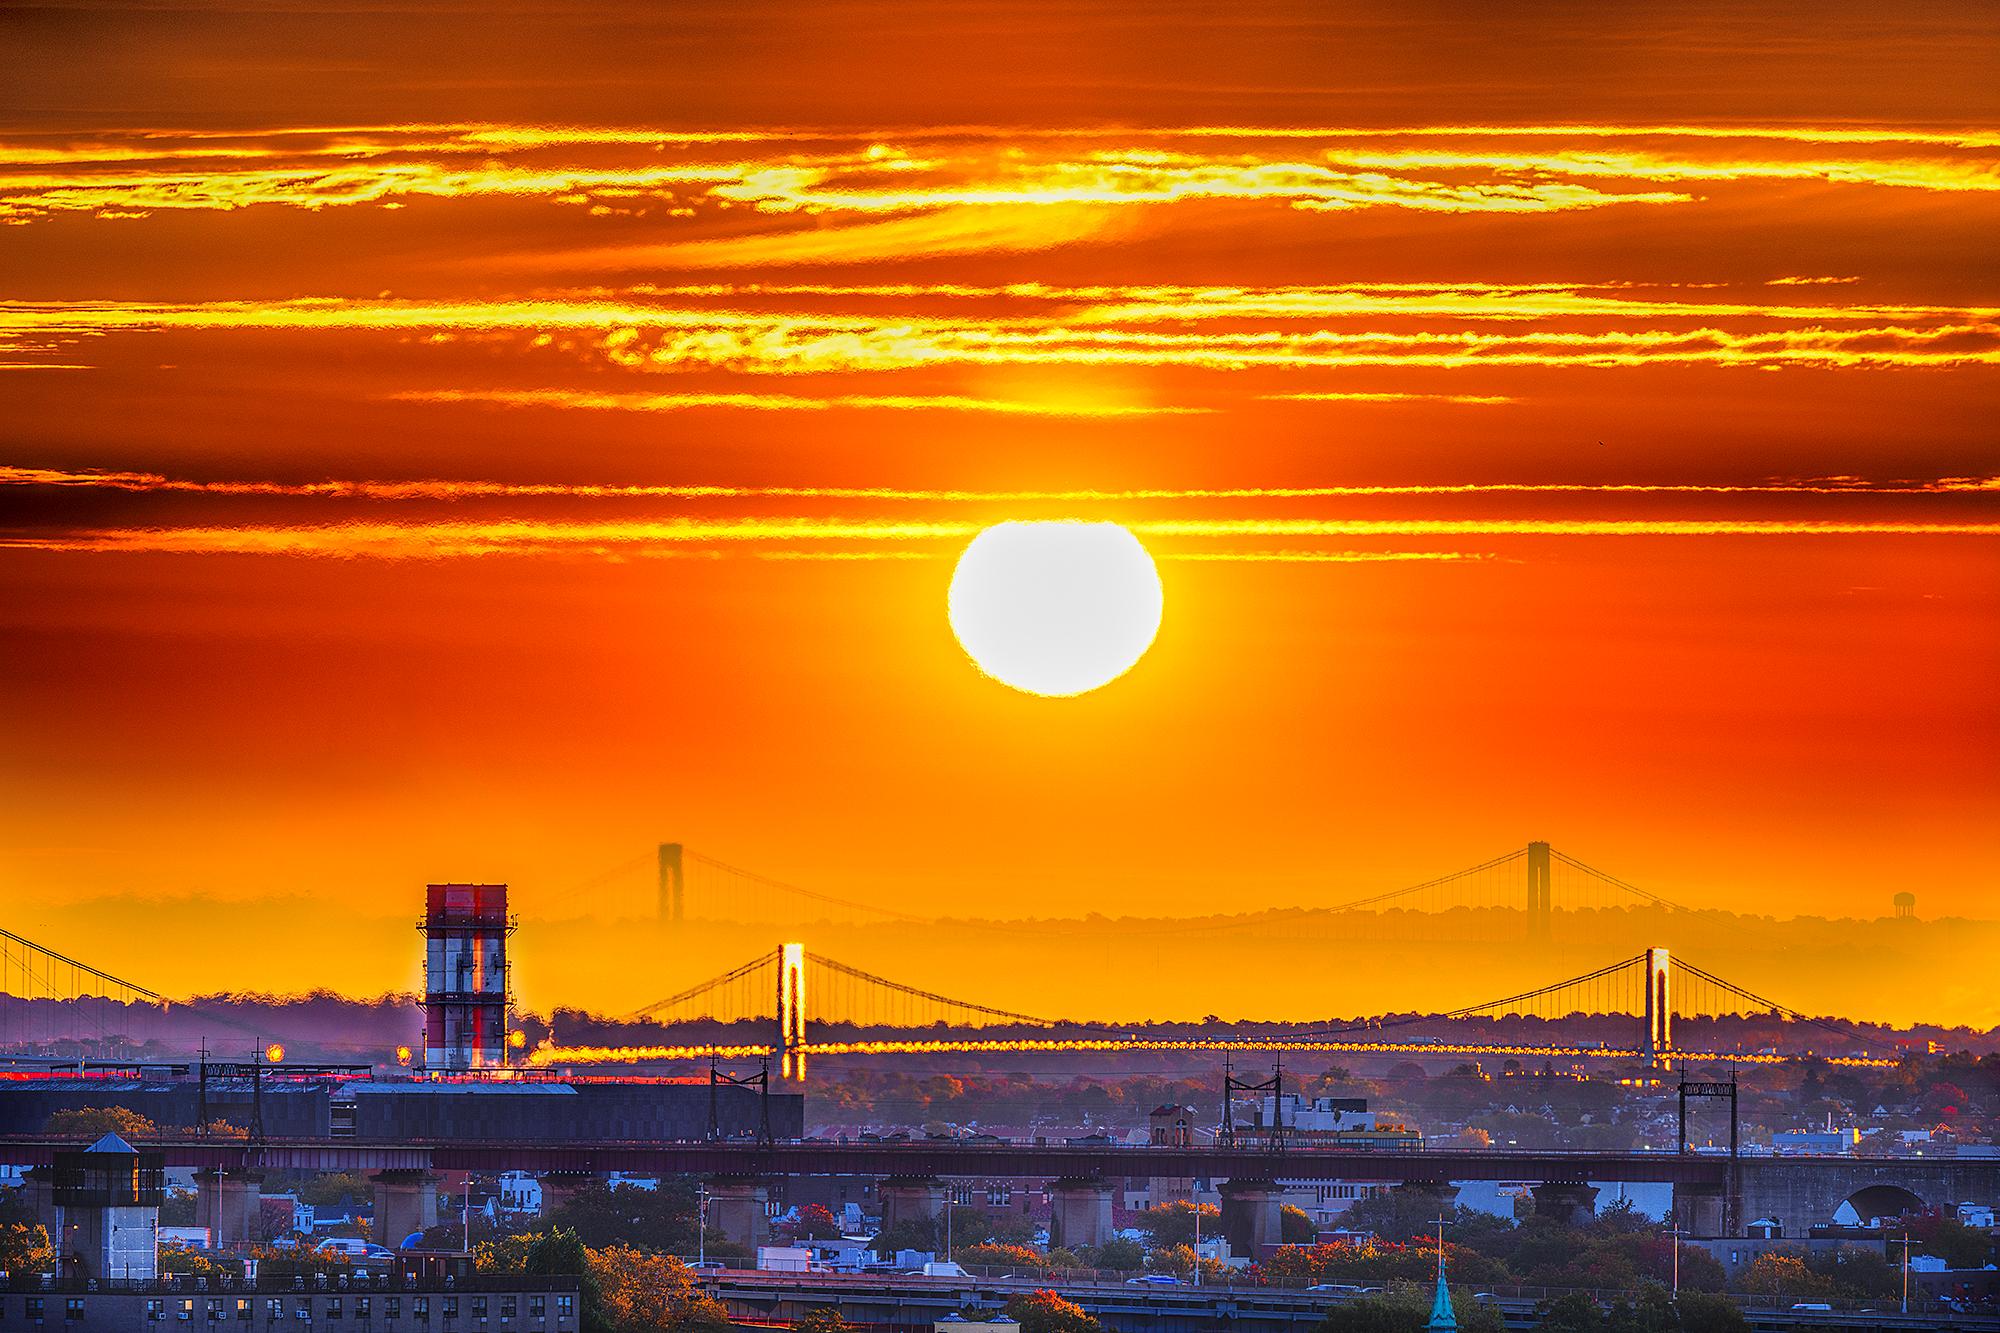 Mitchell Funk Landscape Photograph - The Bridges of New York City at Sunset Vibrant Orange